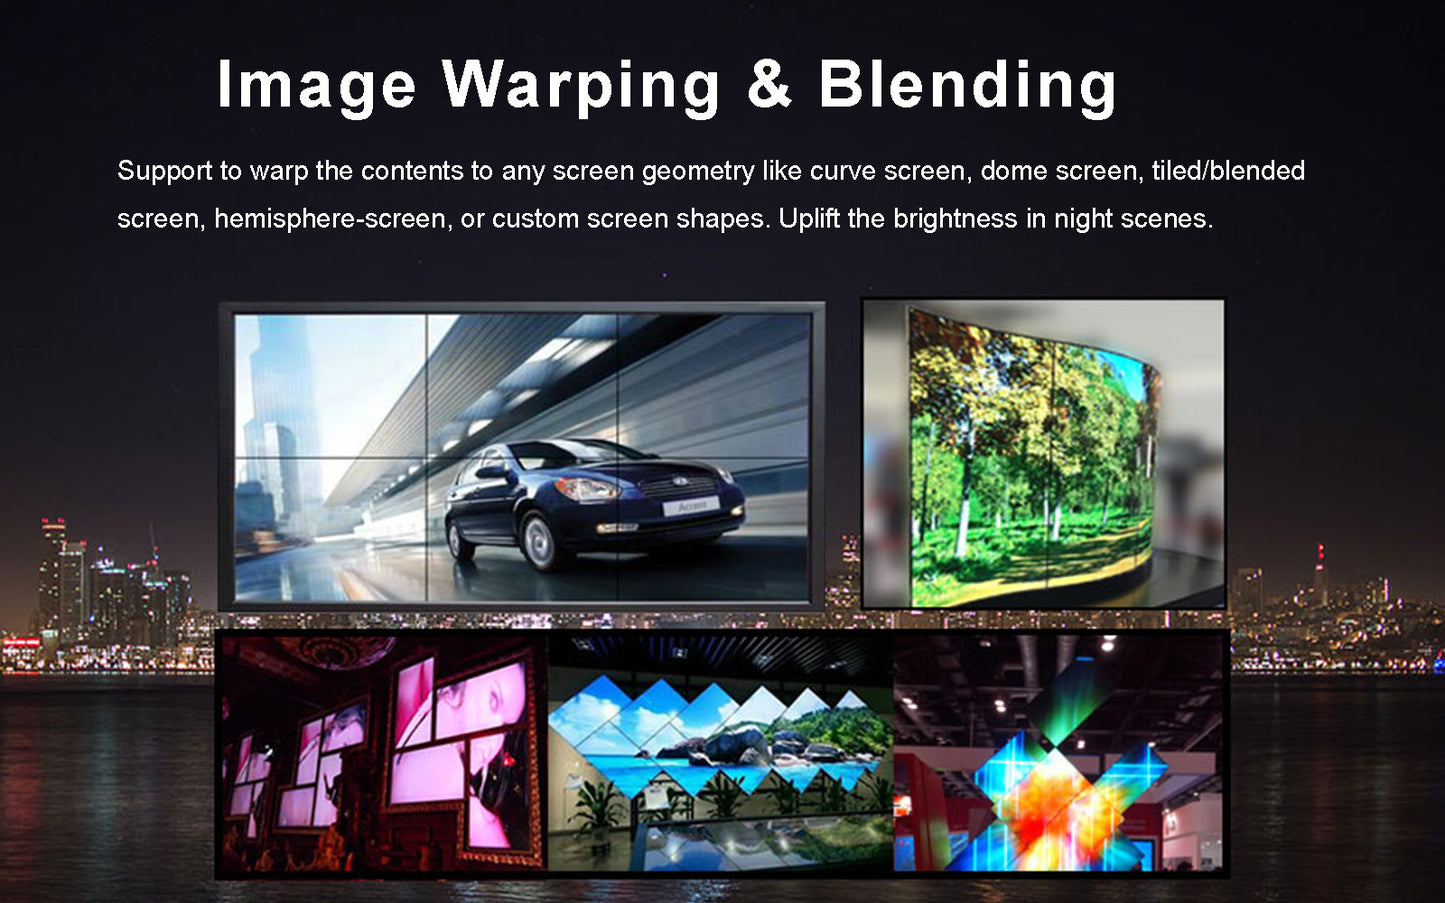 UHD Video Wall Processor-image warping and blending